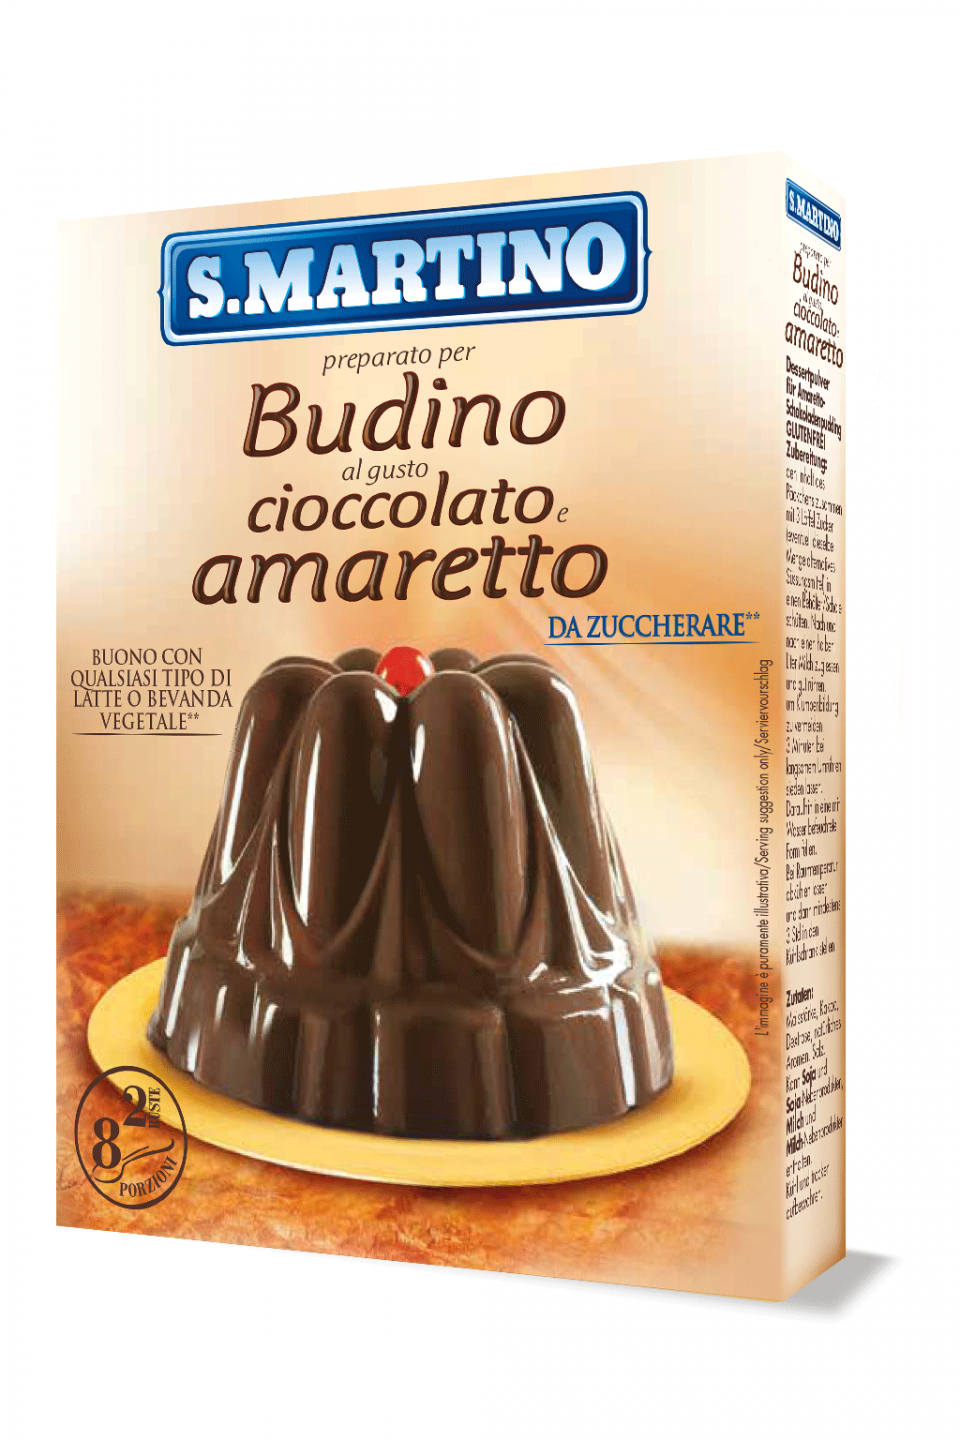 S.MARTINO Budino Amaretto 96g